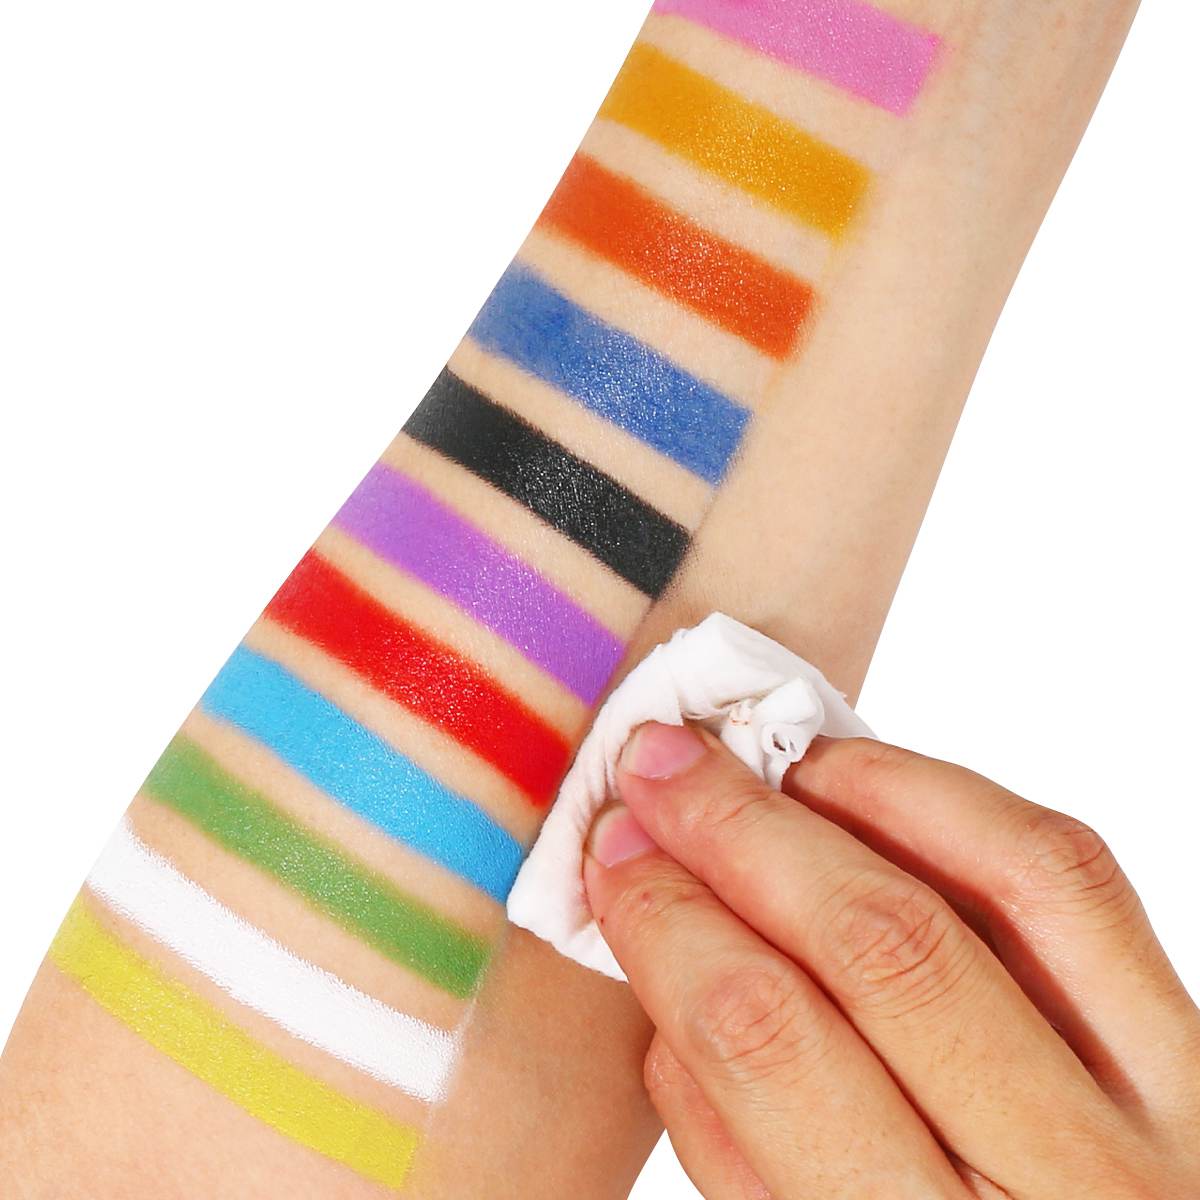 11 Colors Face Paint Kit for Kids